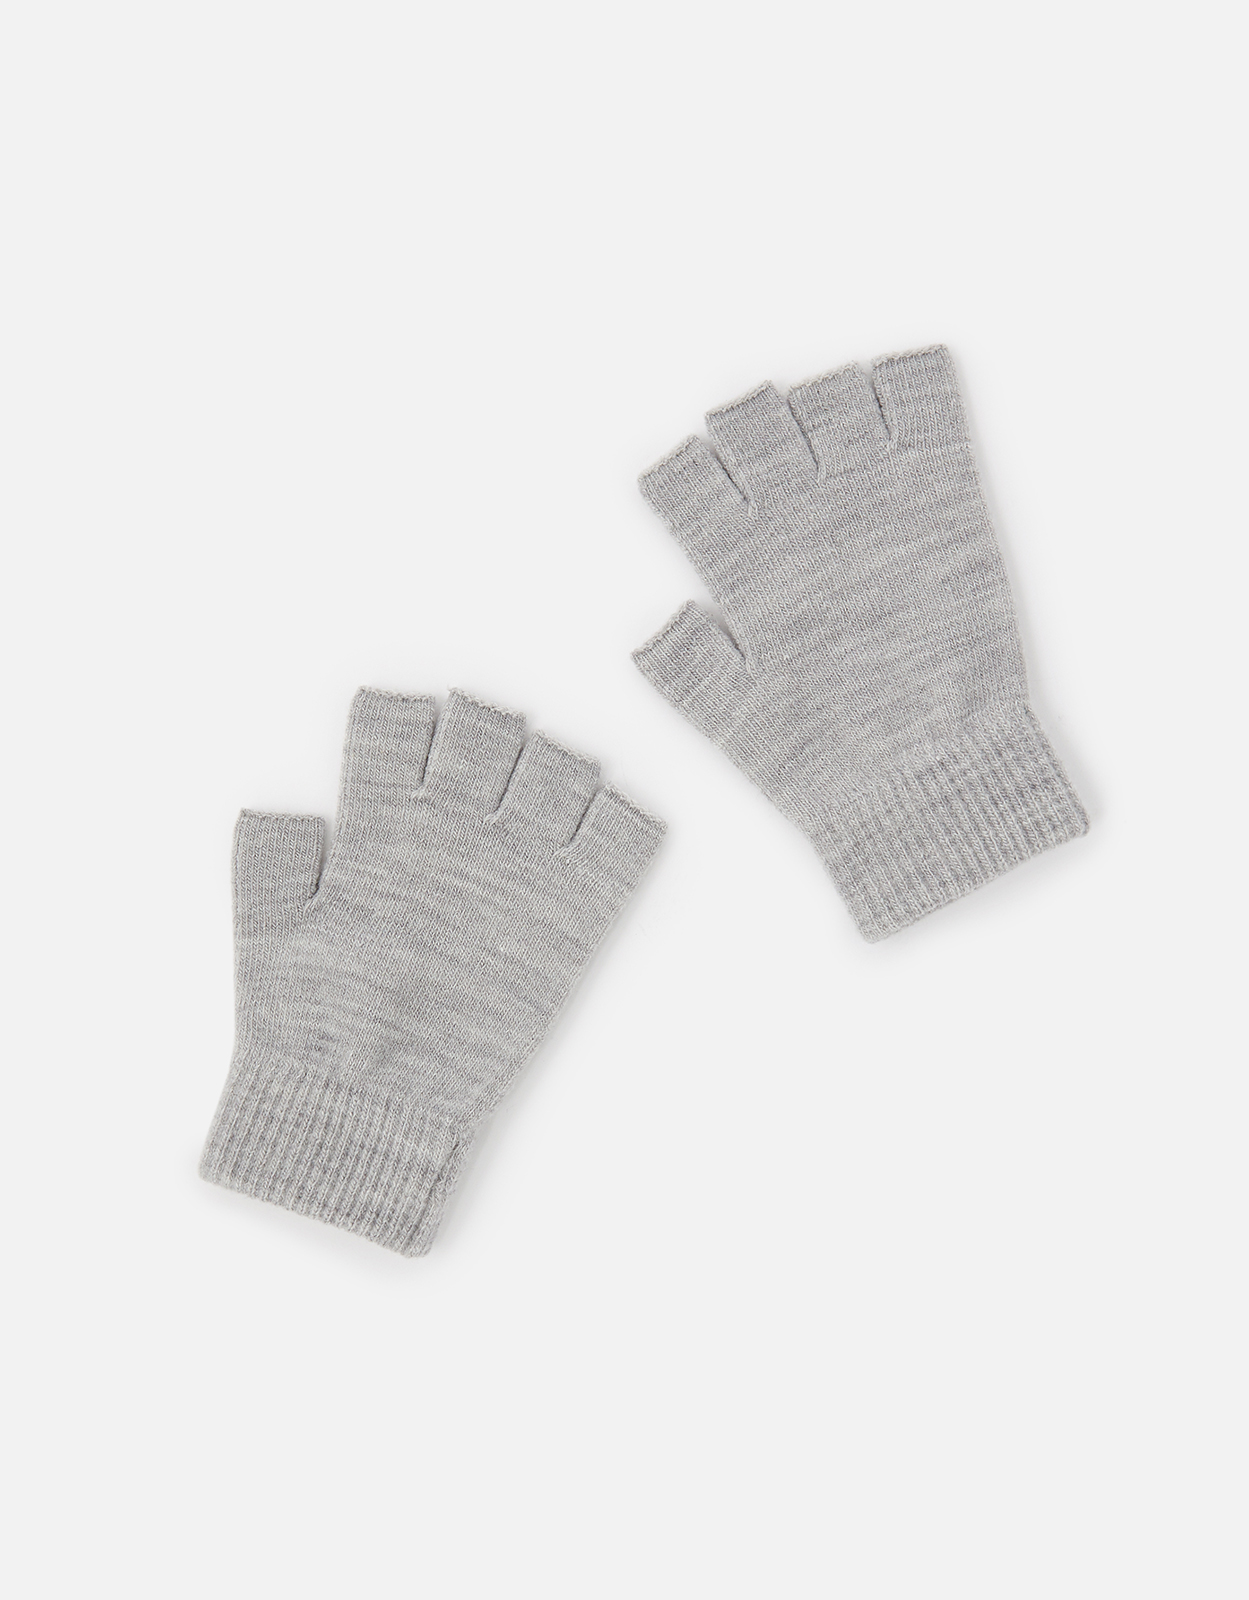 Accessorize Grey Plain Fingerless Gloves, Size: One Size